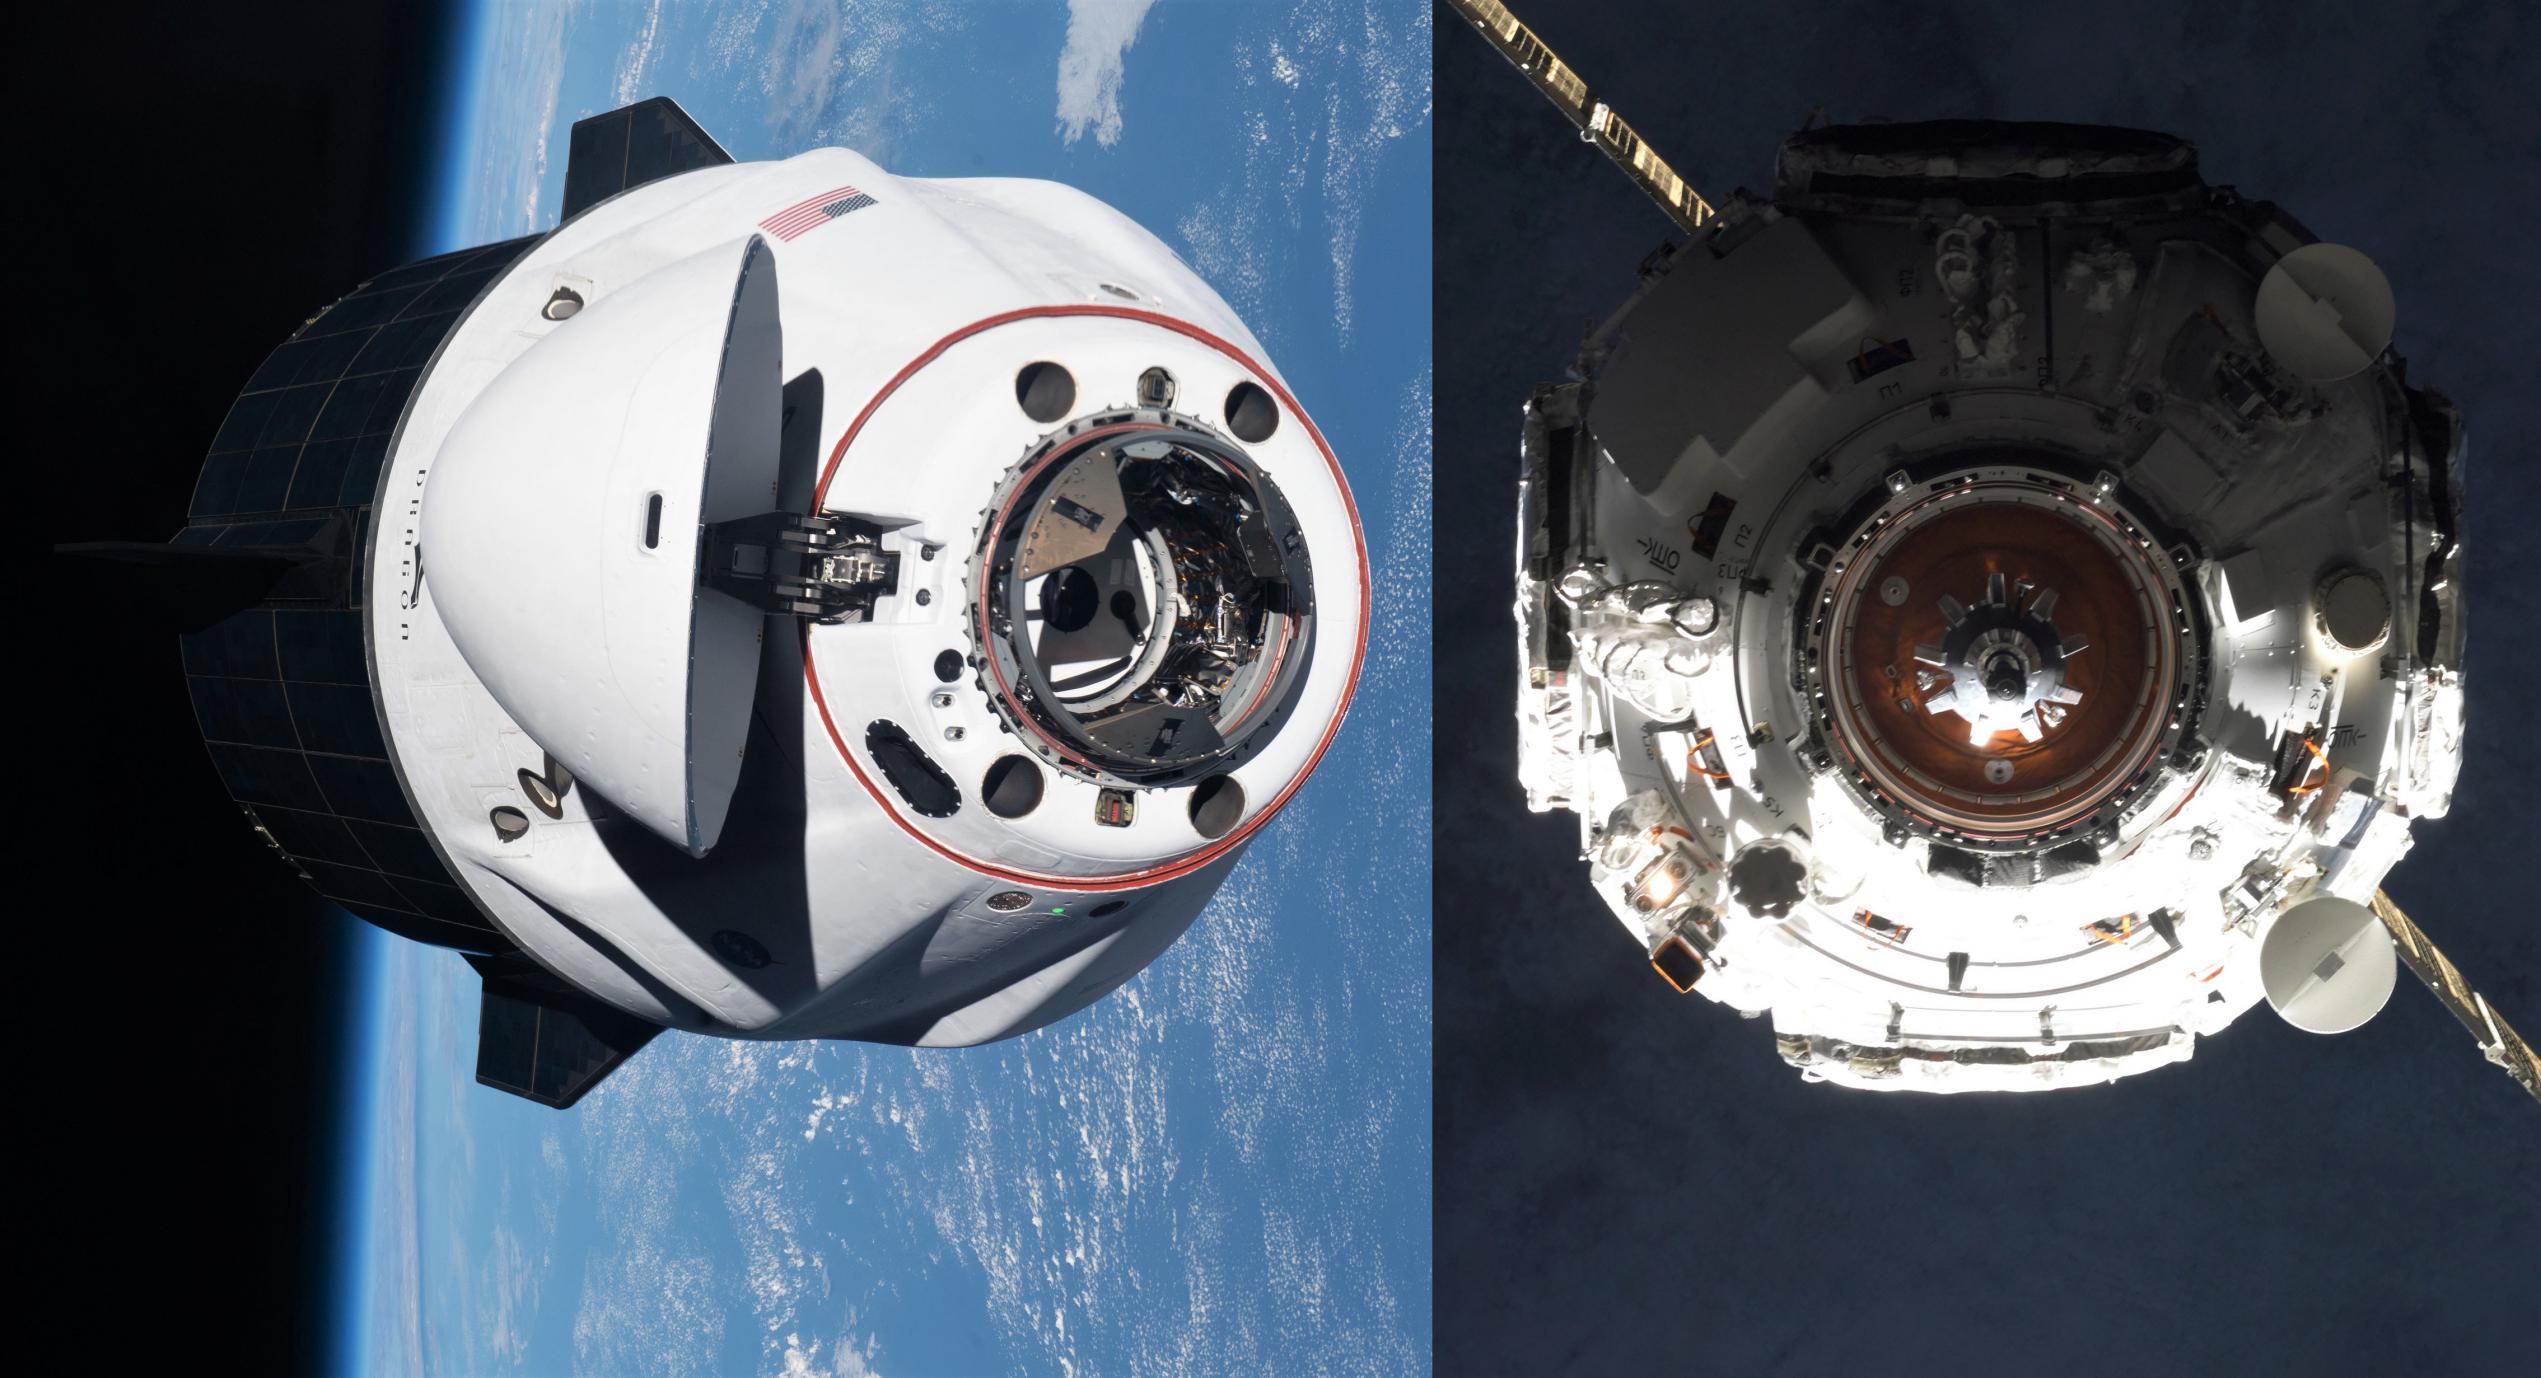 Prichal Progress ISS docking 112621 (Anton Shkaplerov) Crew-1 Dragon (Mike Hopkins) 2 (c)